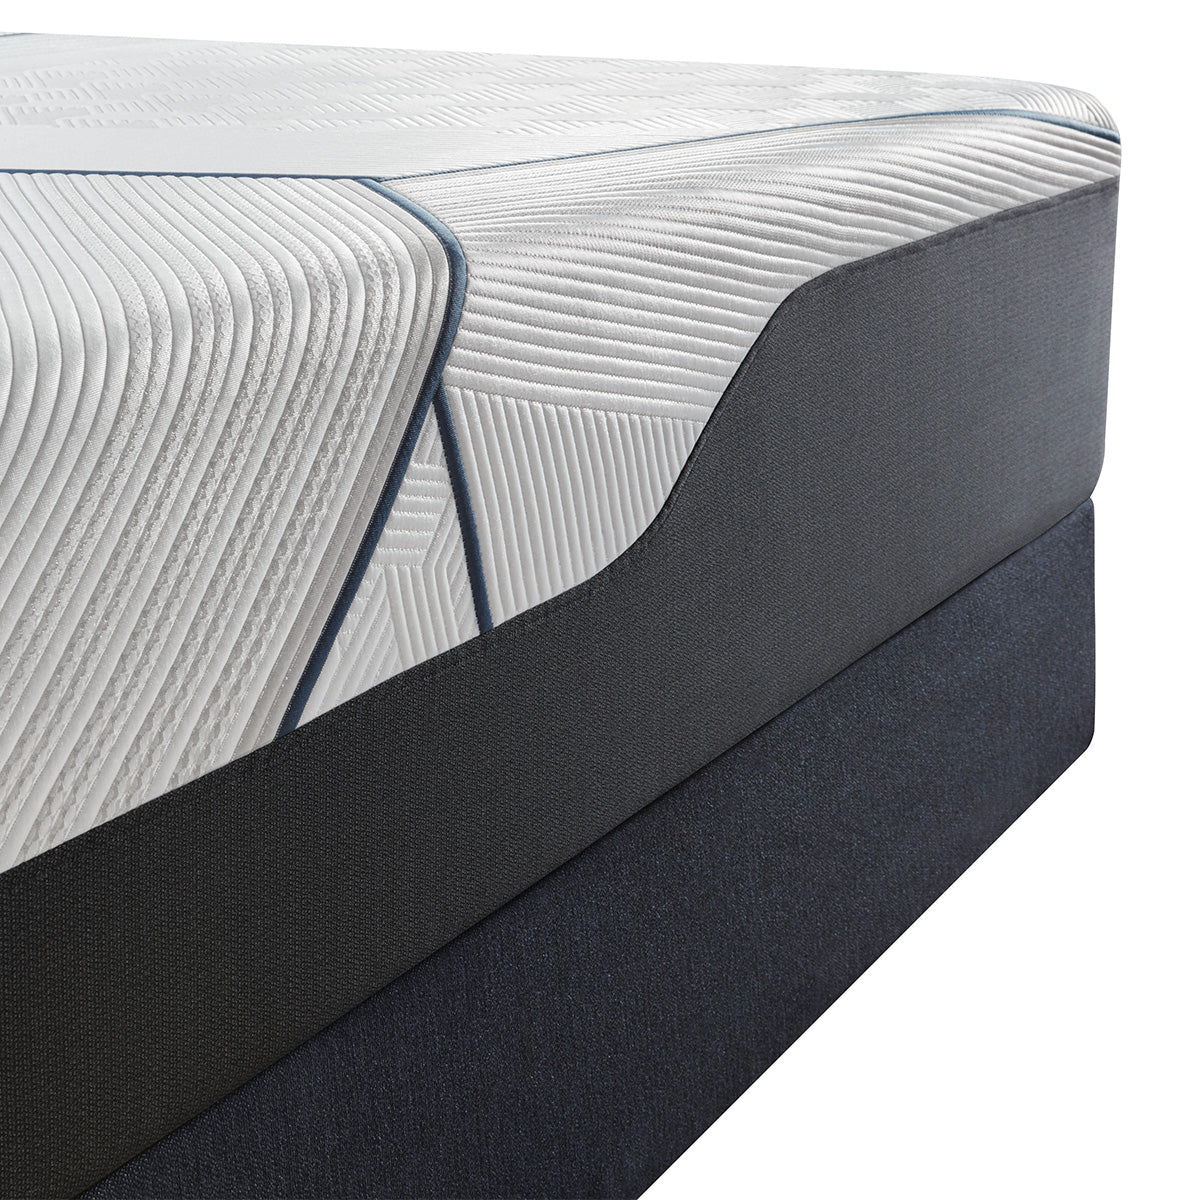 Serta iComfort Blue Foundation mattress on top corner detail